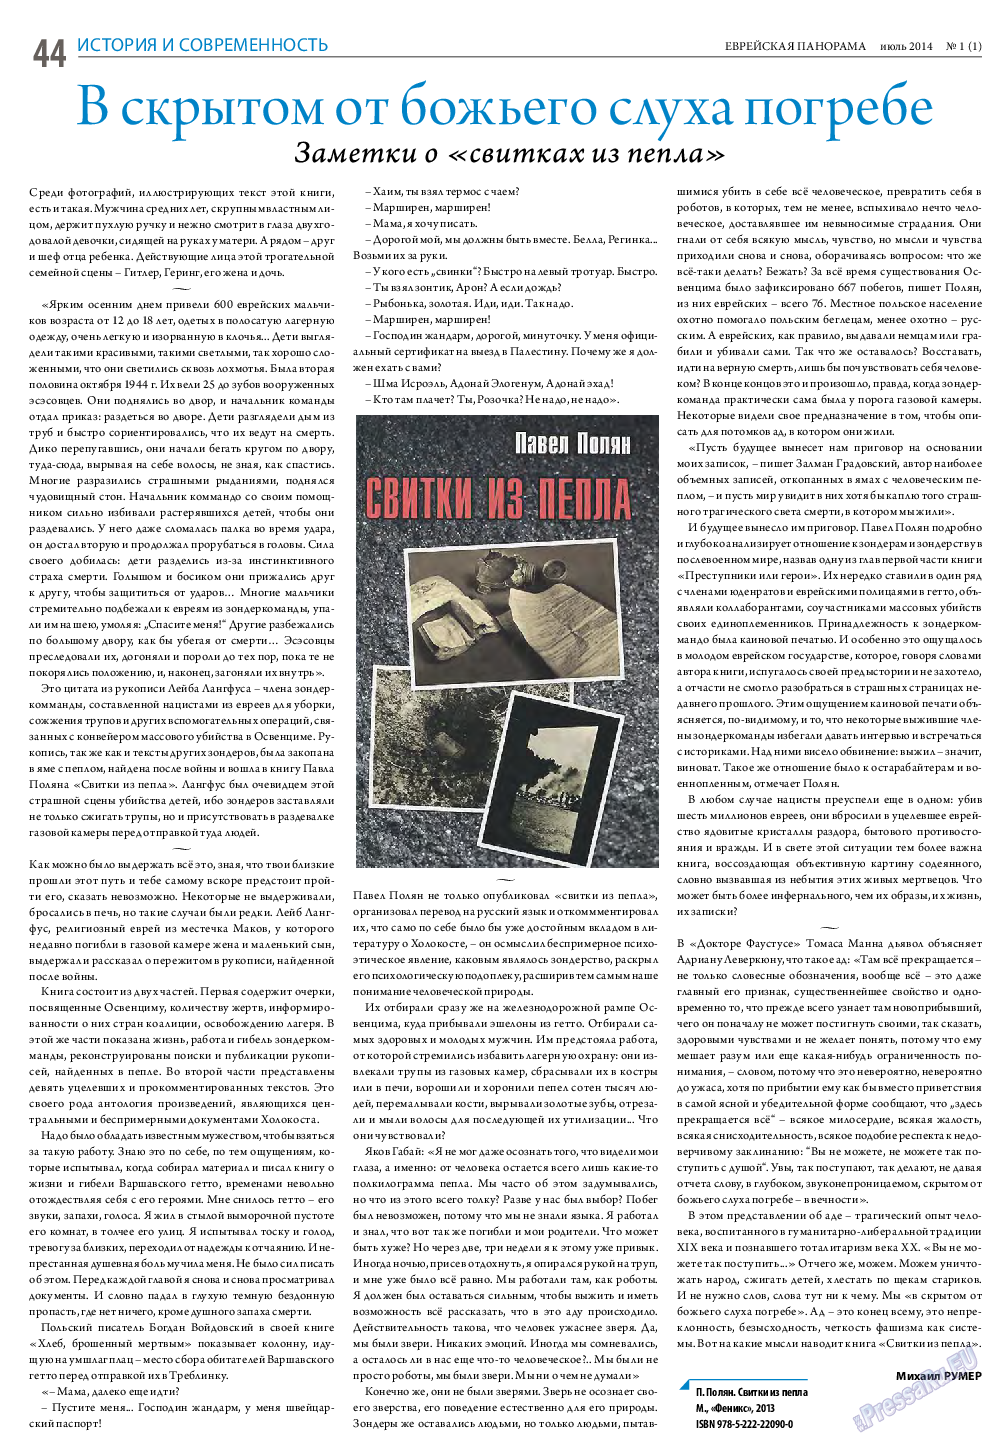 Еврейская панорама, газета. 2014 №1 стр.44